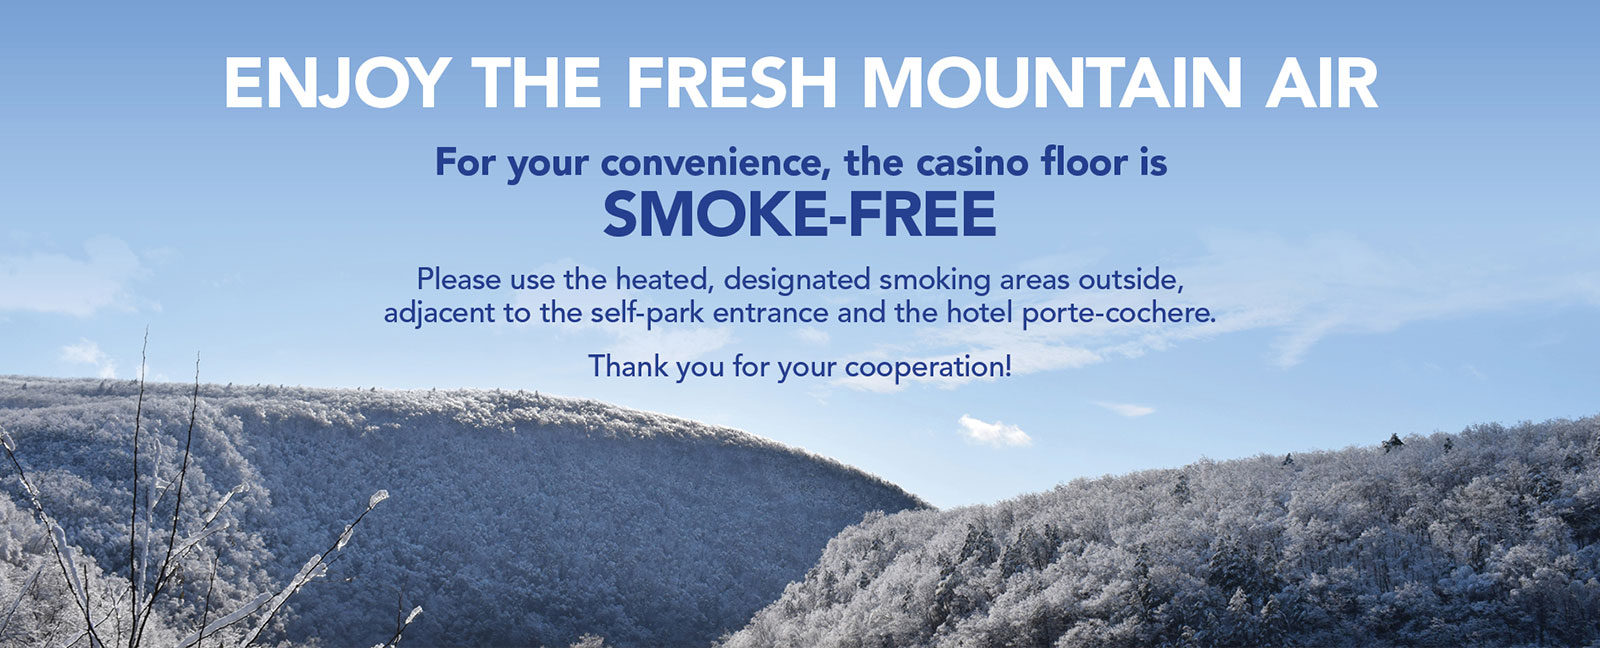 no smoking - fresh mountain air